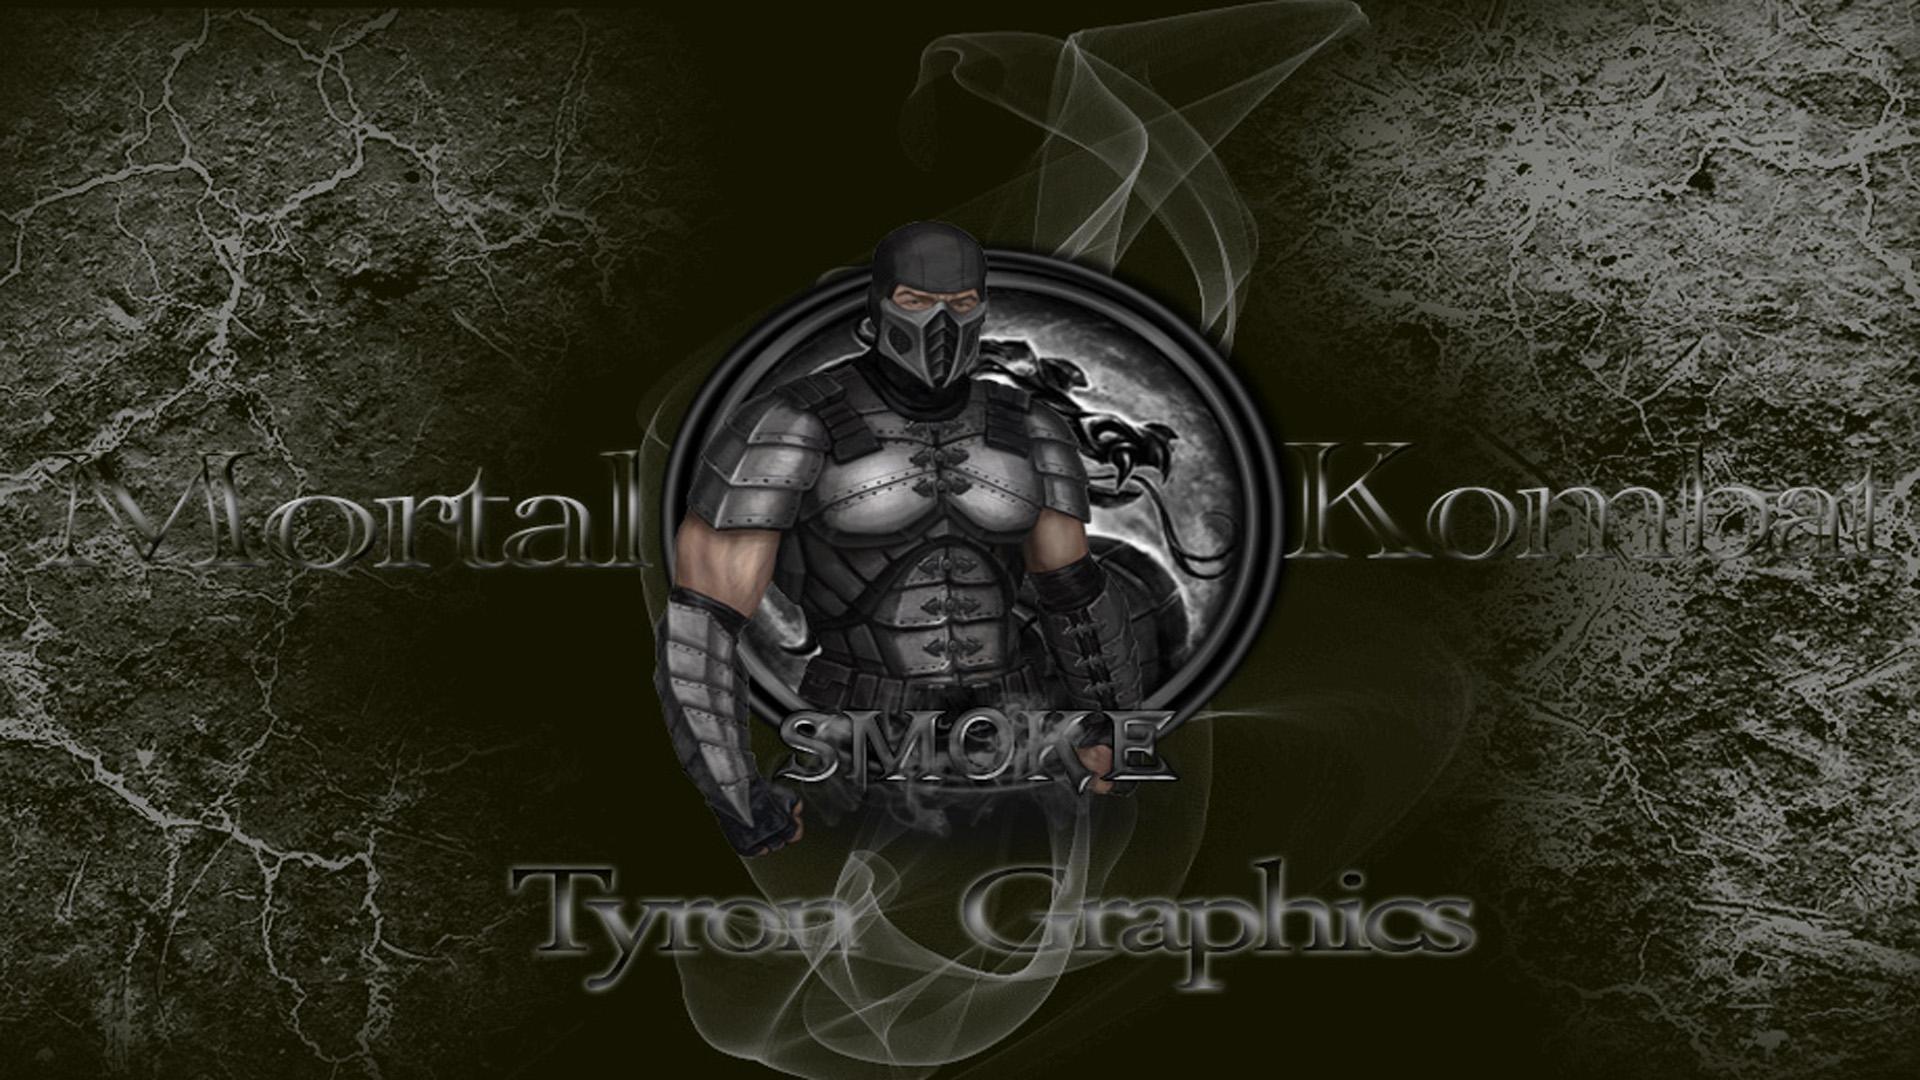 Smoke From Mortal Kombat HD desktop wallpaper, Widescreen, High